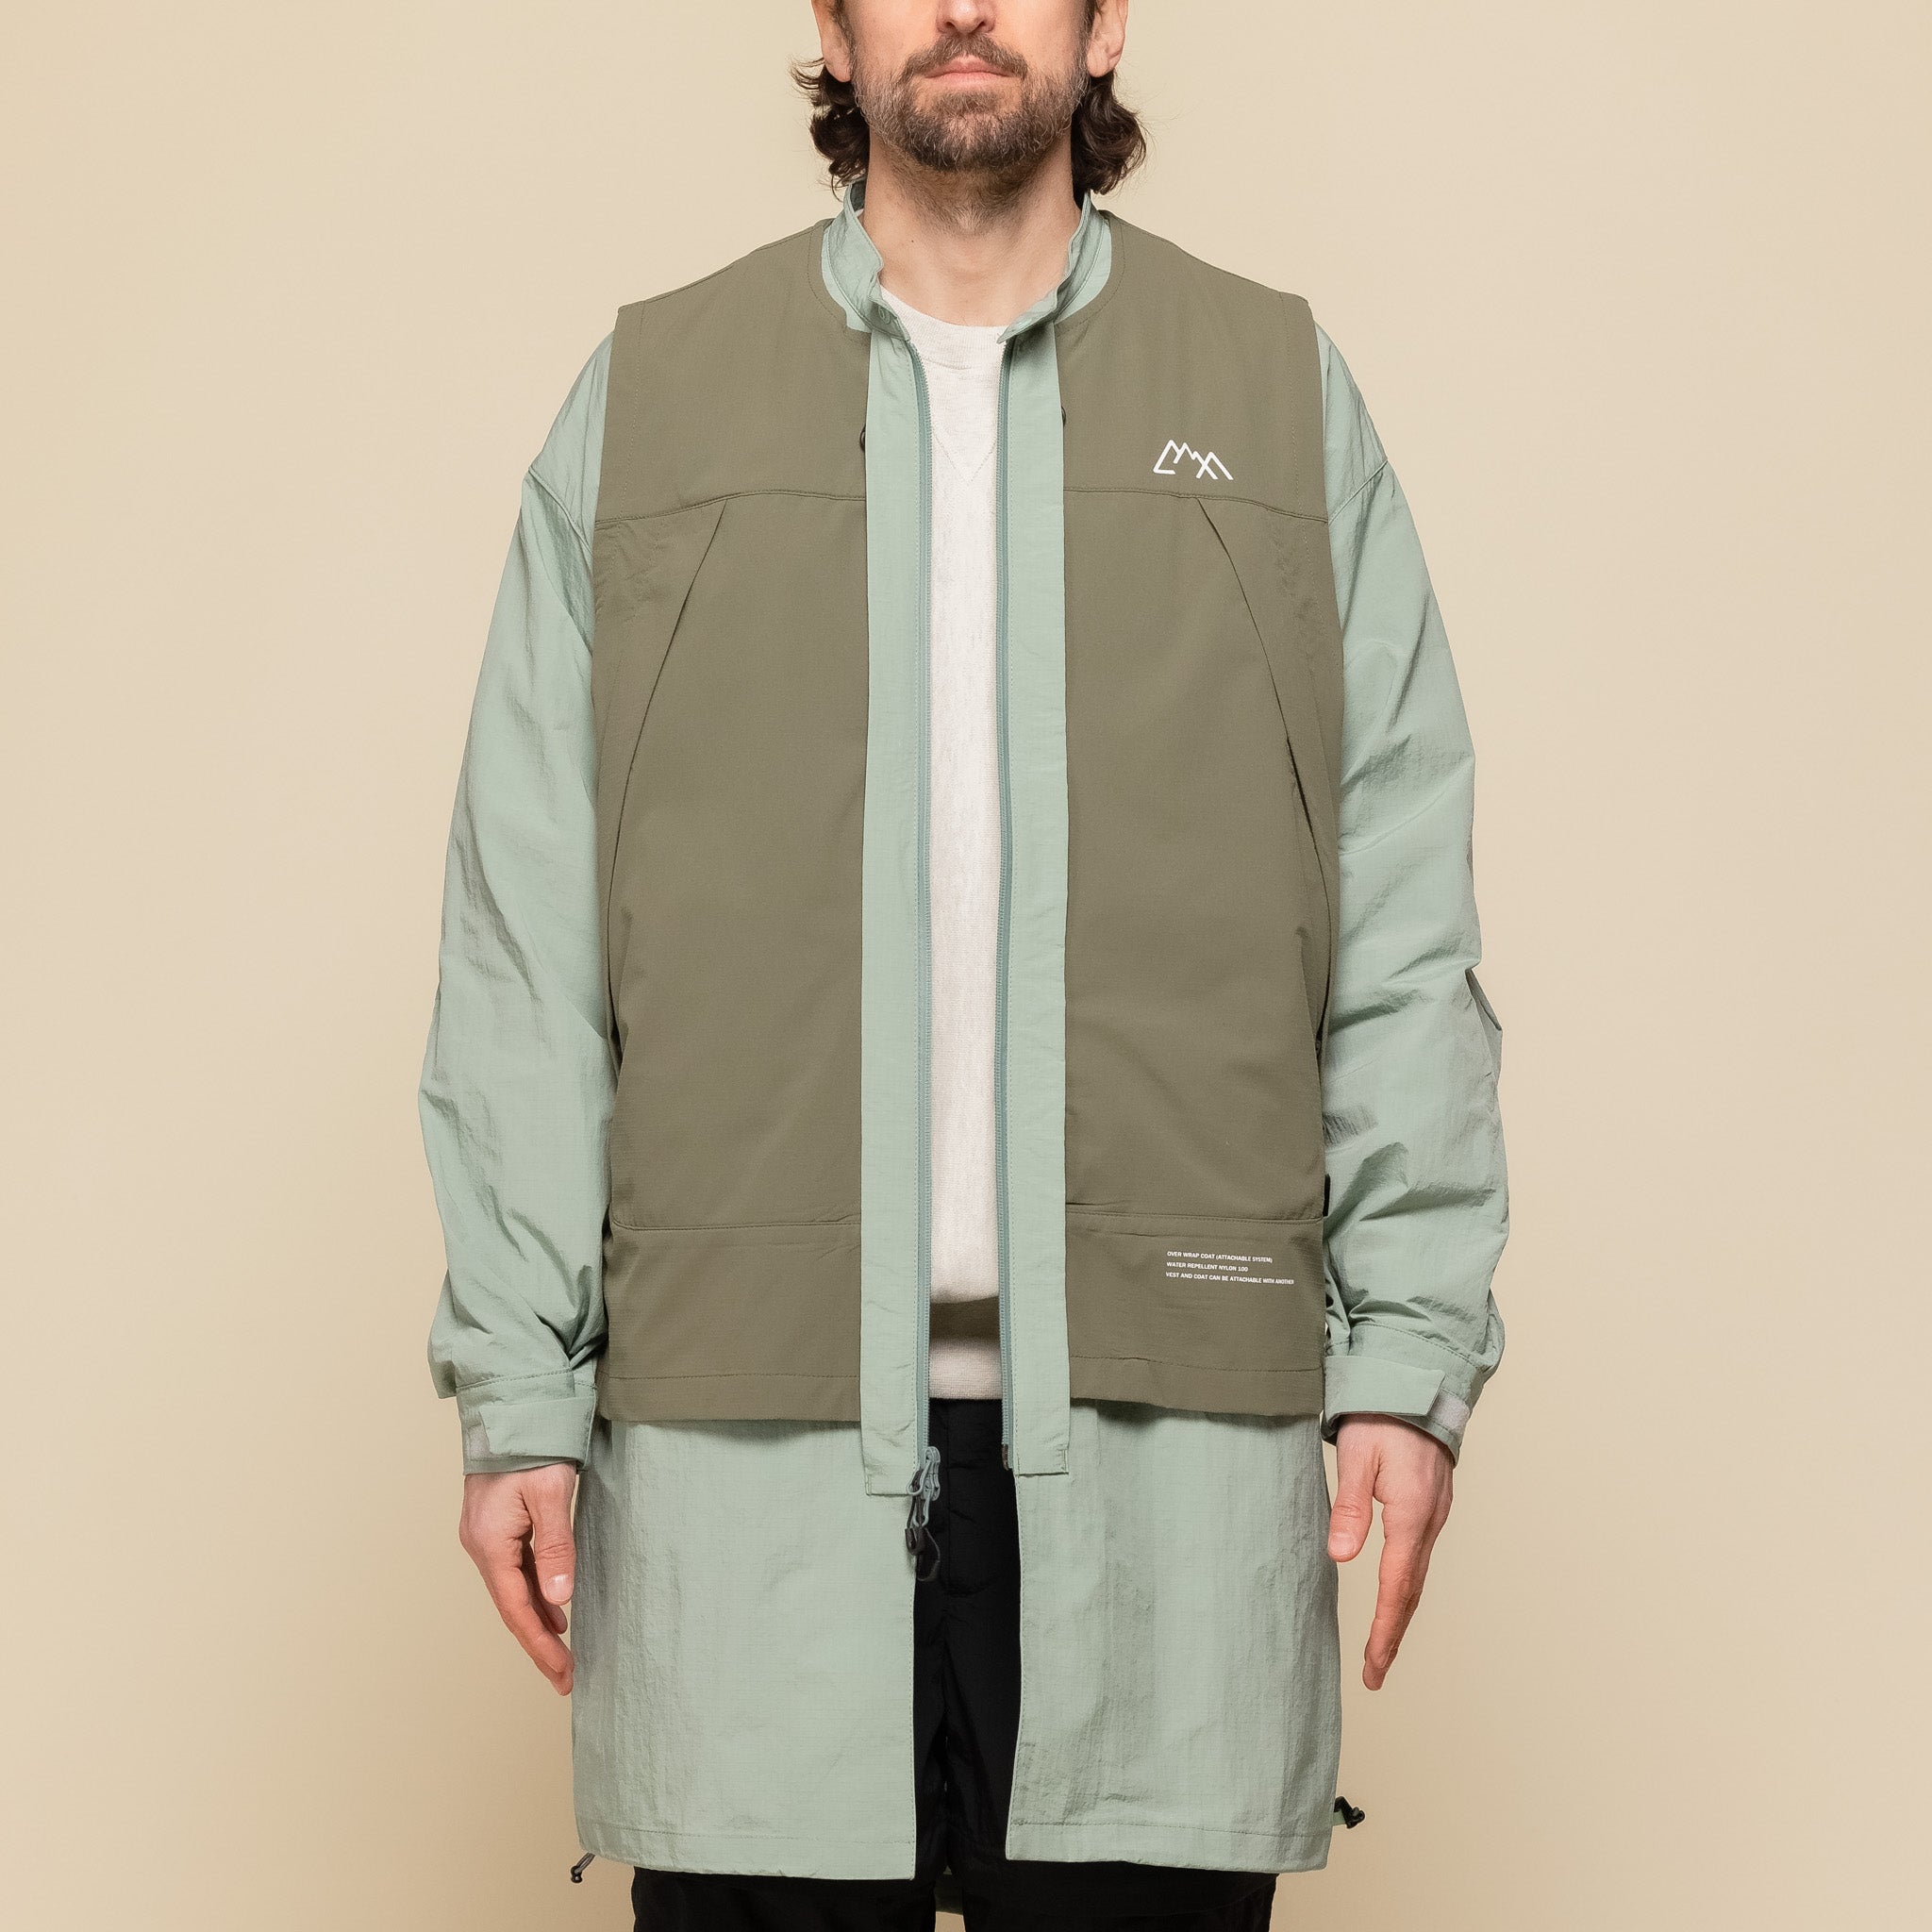 CMF Comfy Outdoor Garment - Untitled Coat - Light Khaki